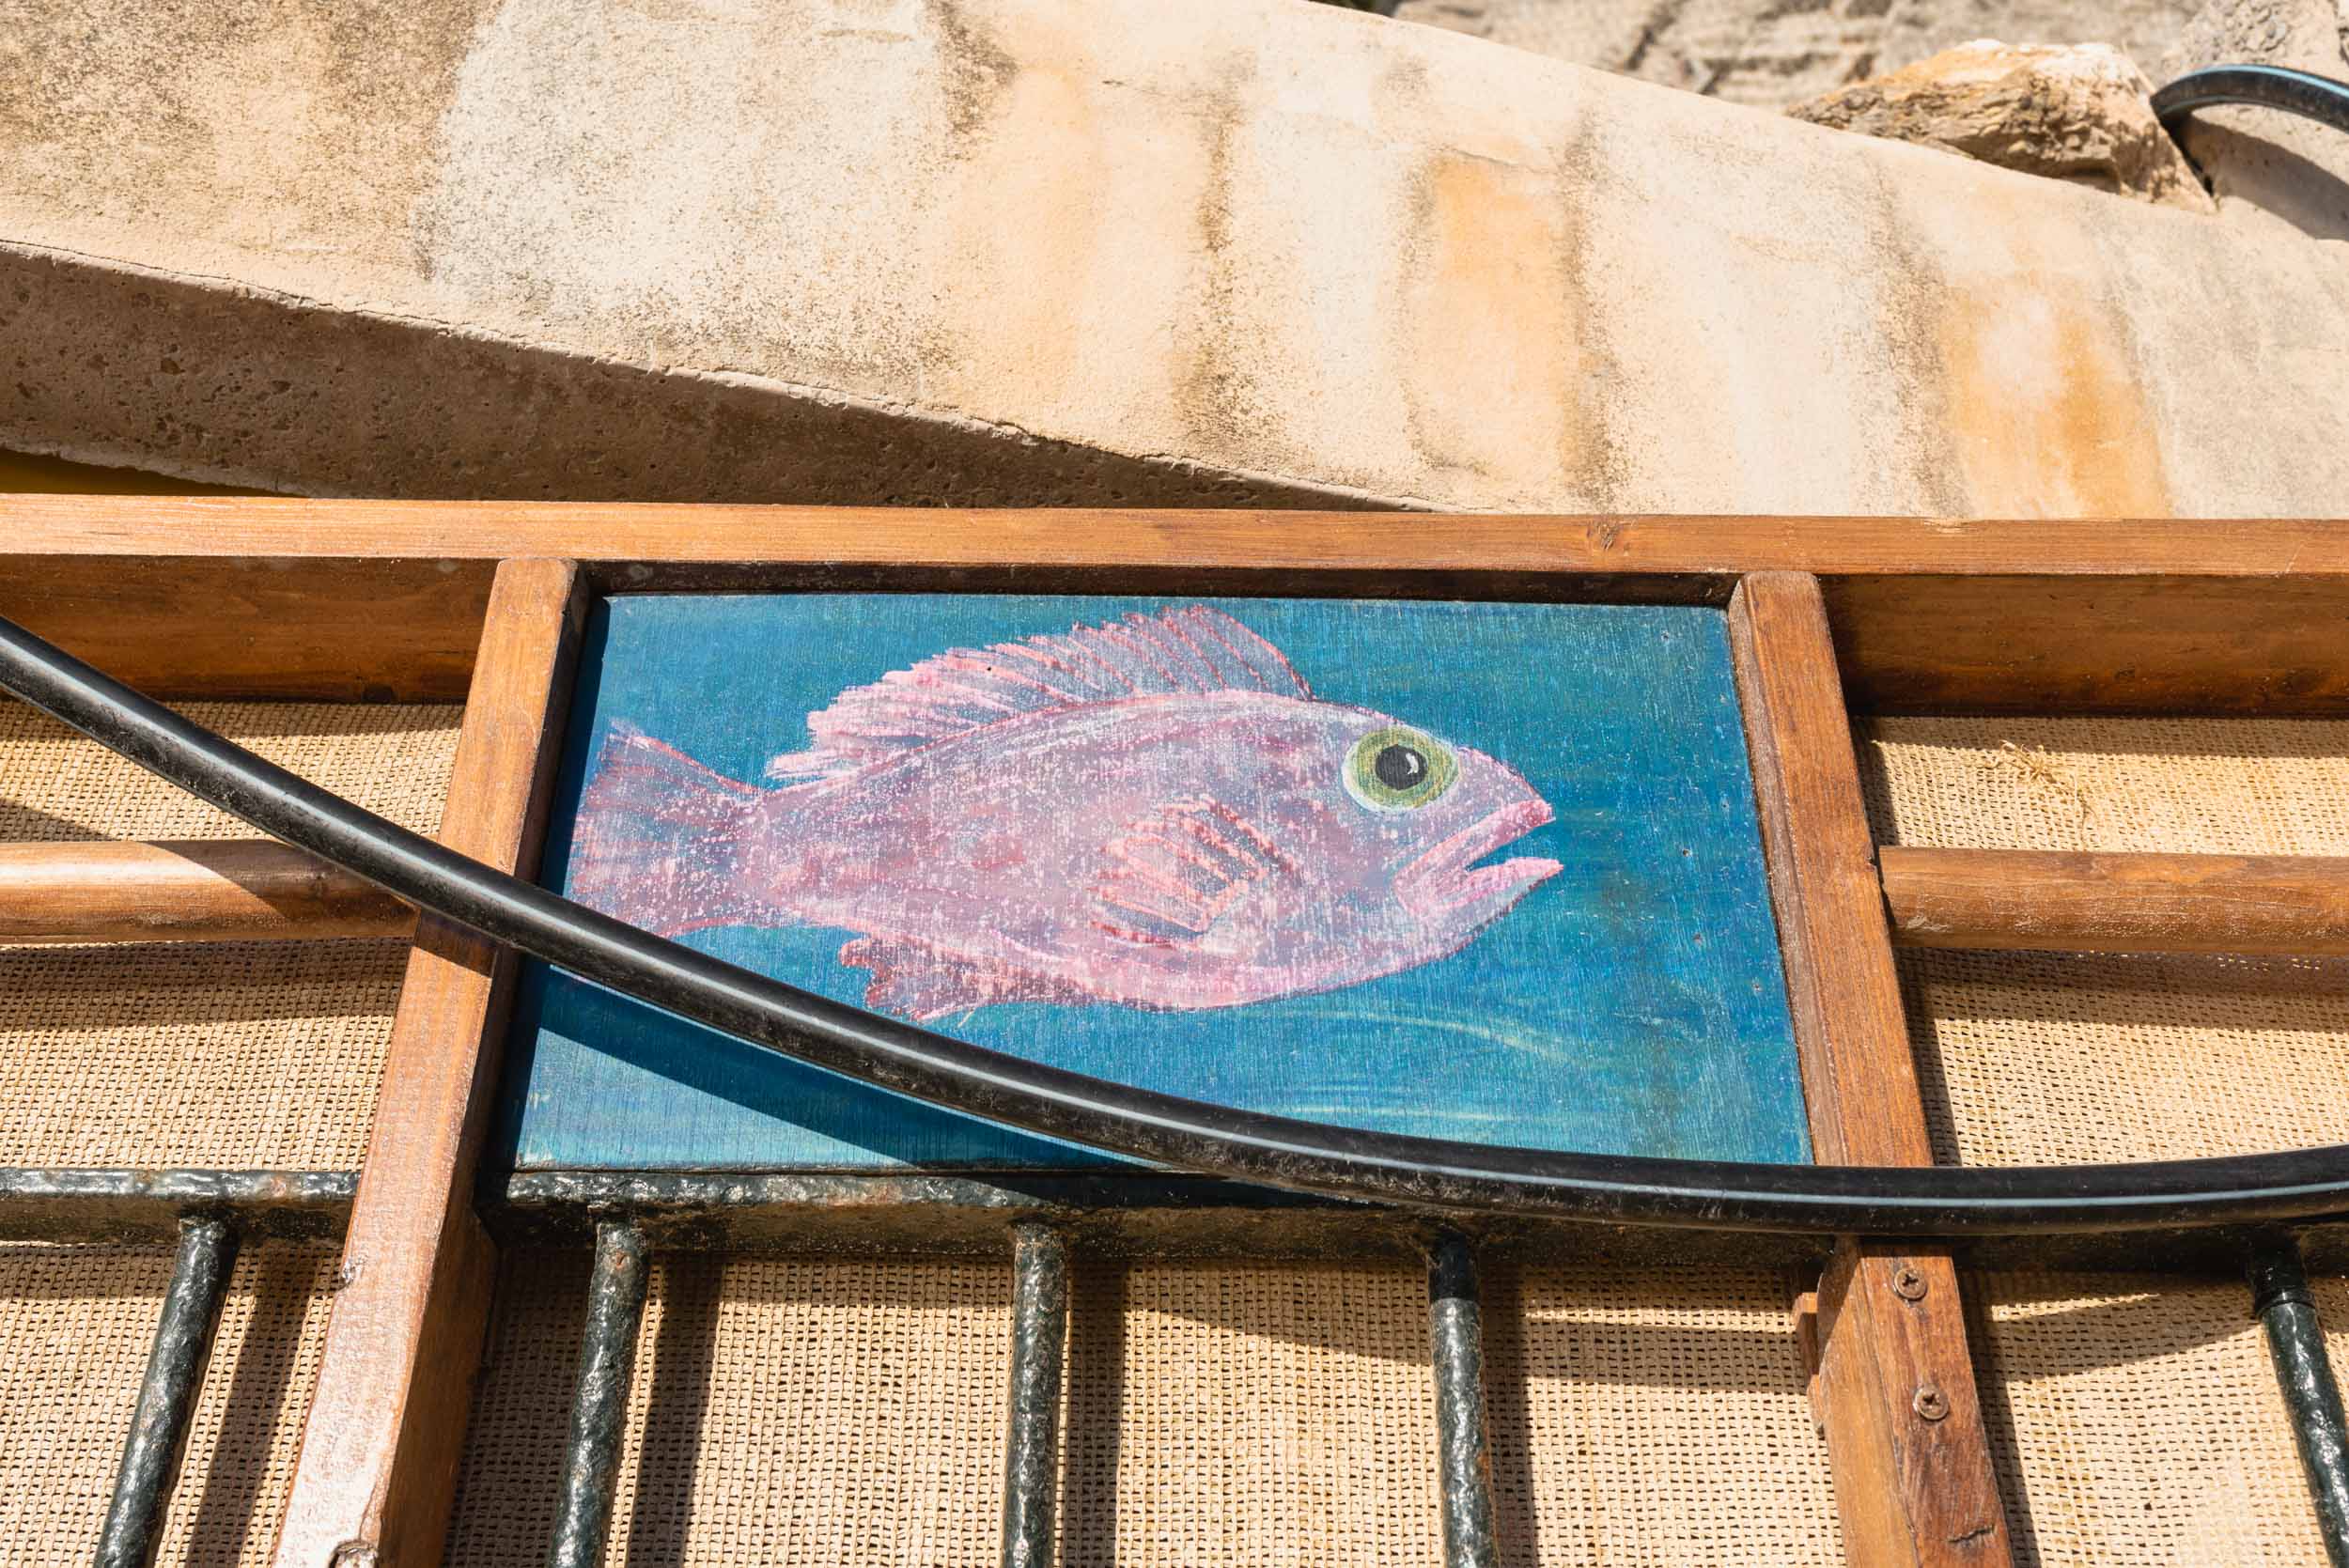 Fish painting on wall in Banyalbufar, Spain